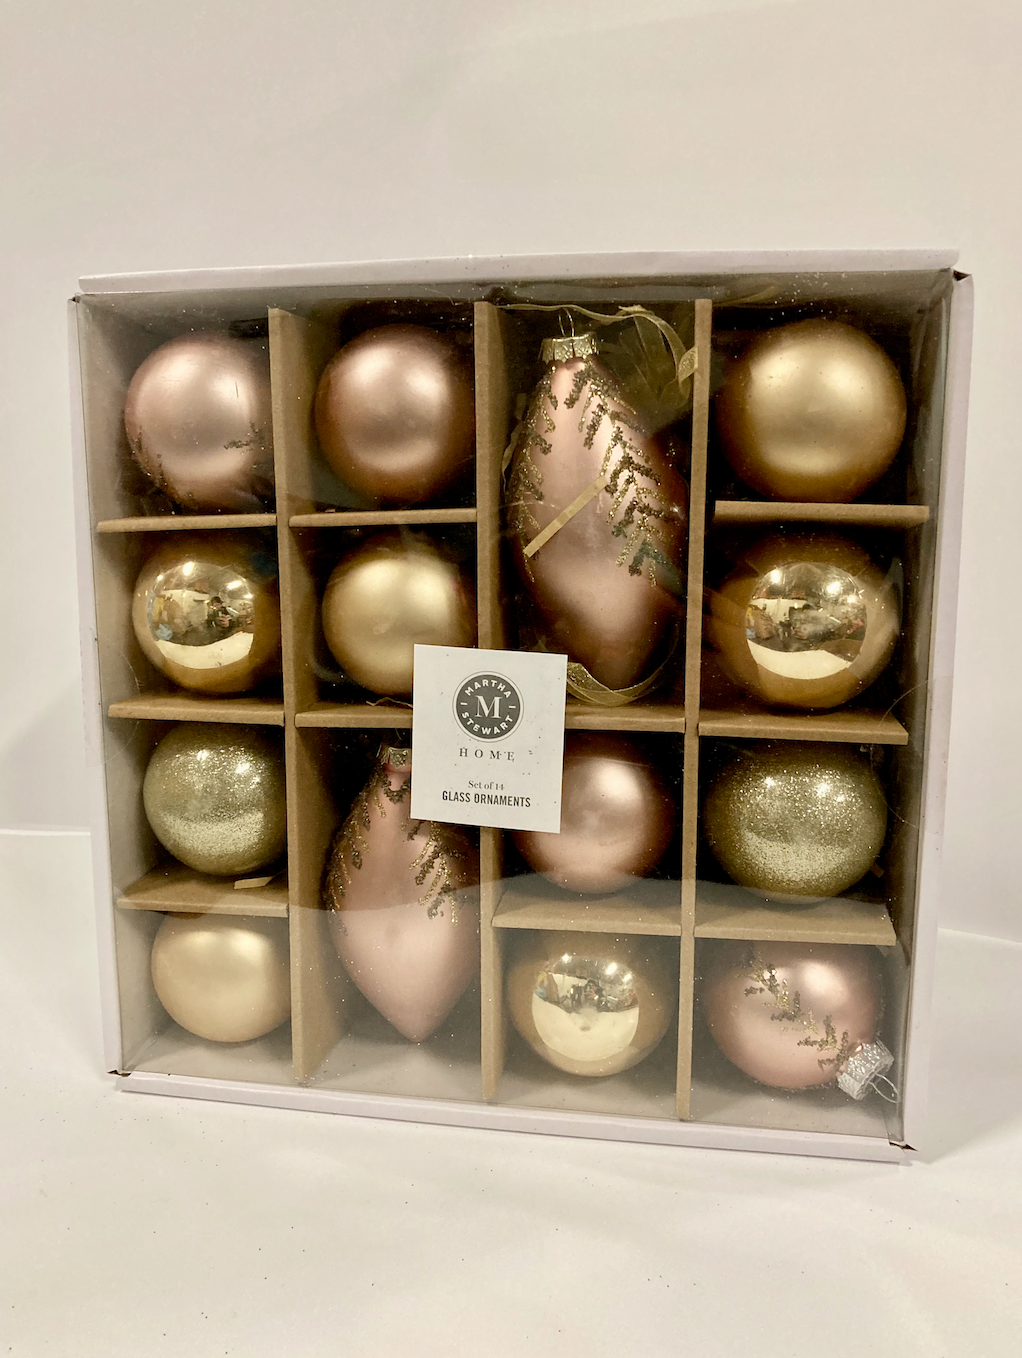 Martha Stewart Home Set of 14 Glass Ornaments - Gold/Rose Gold